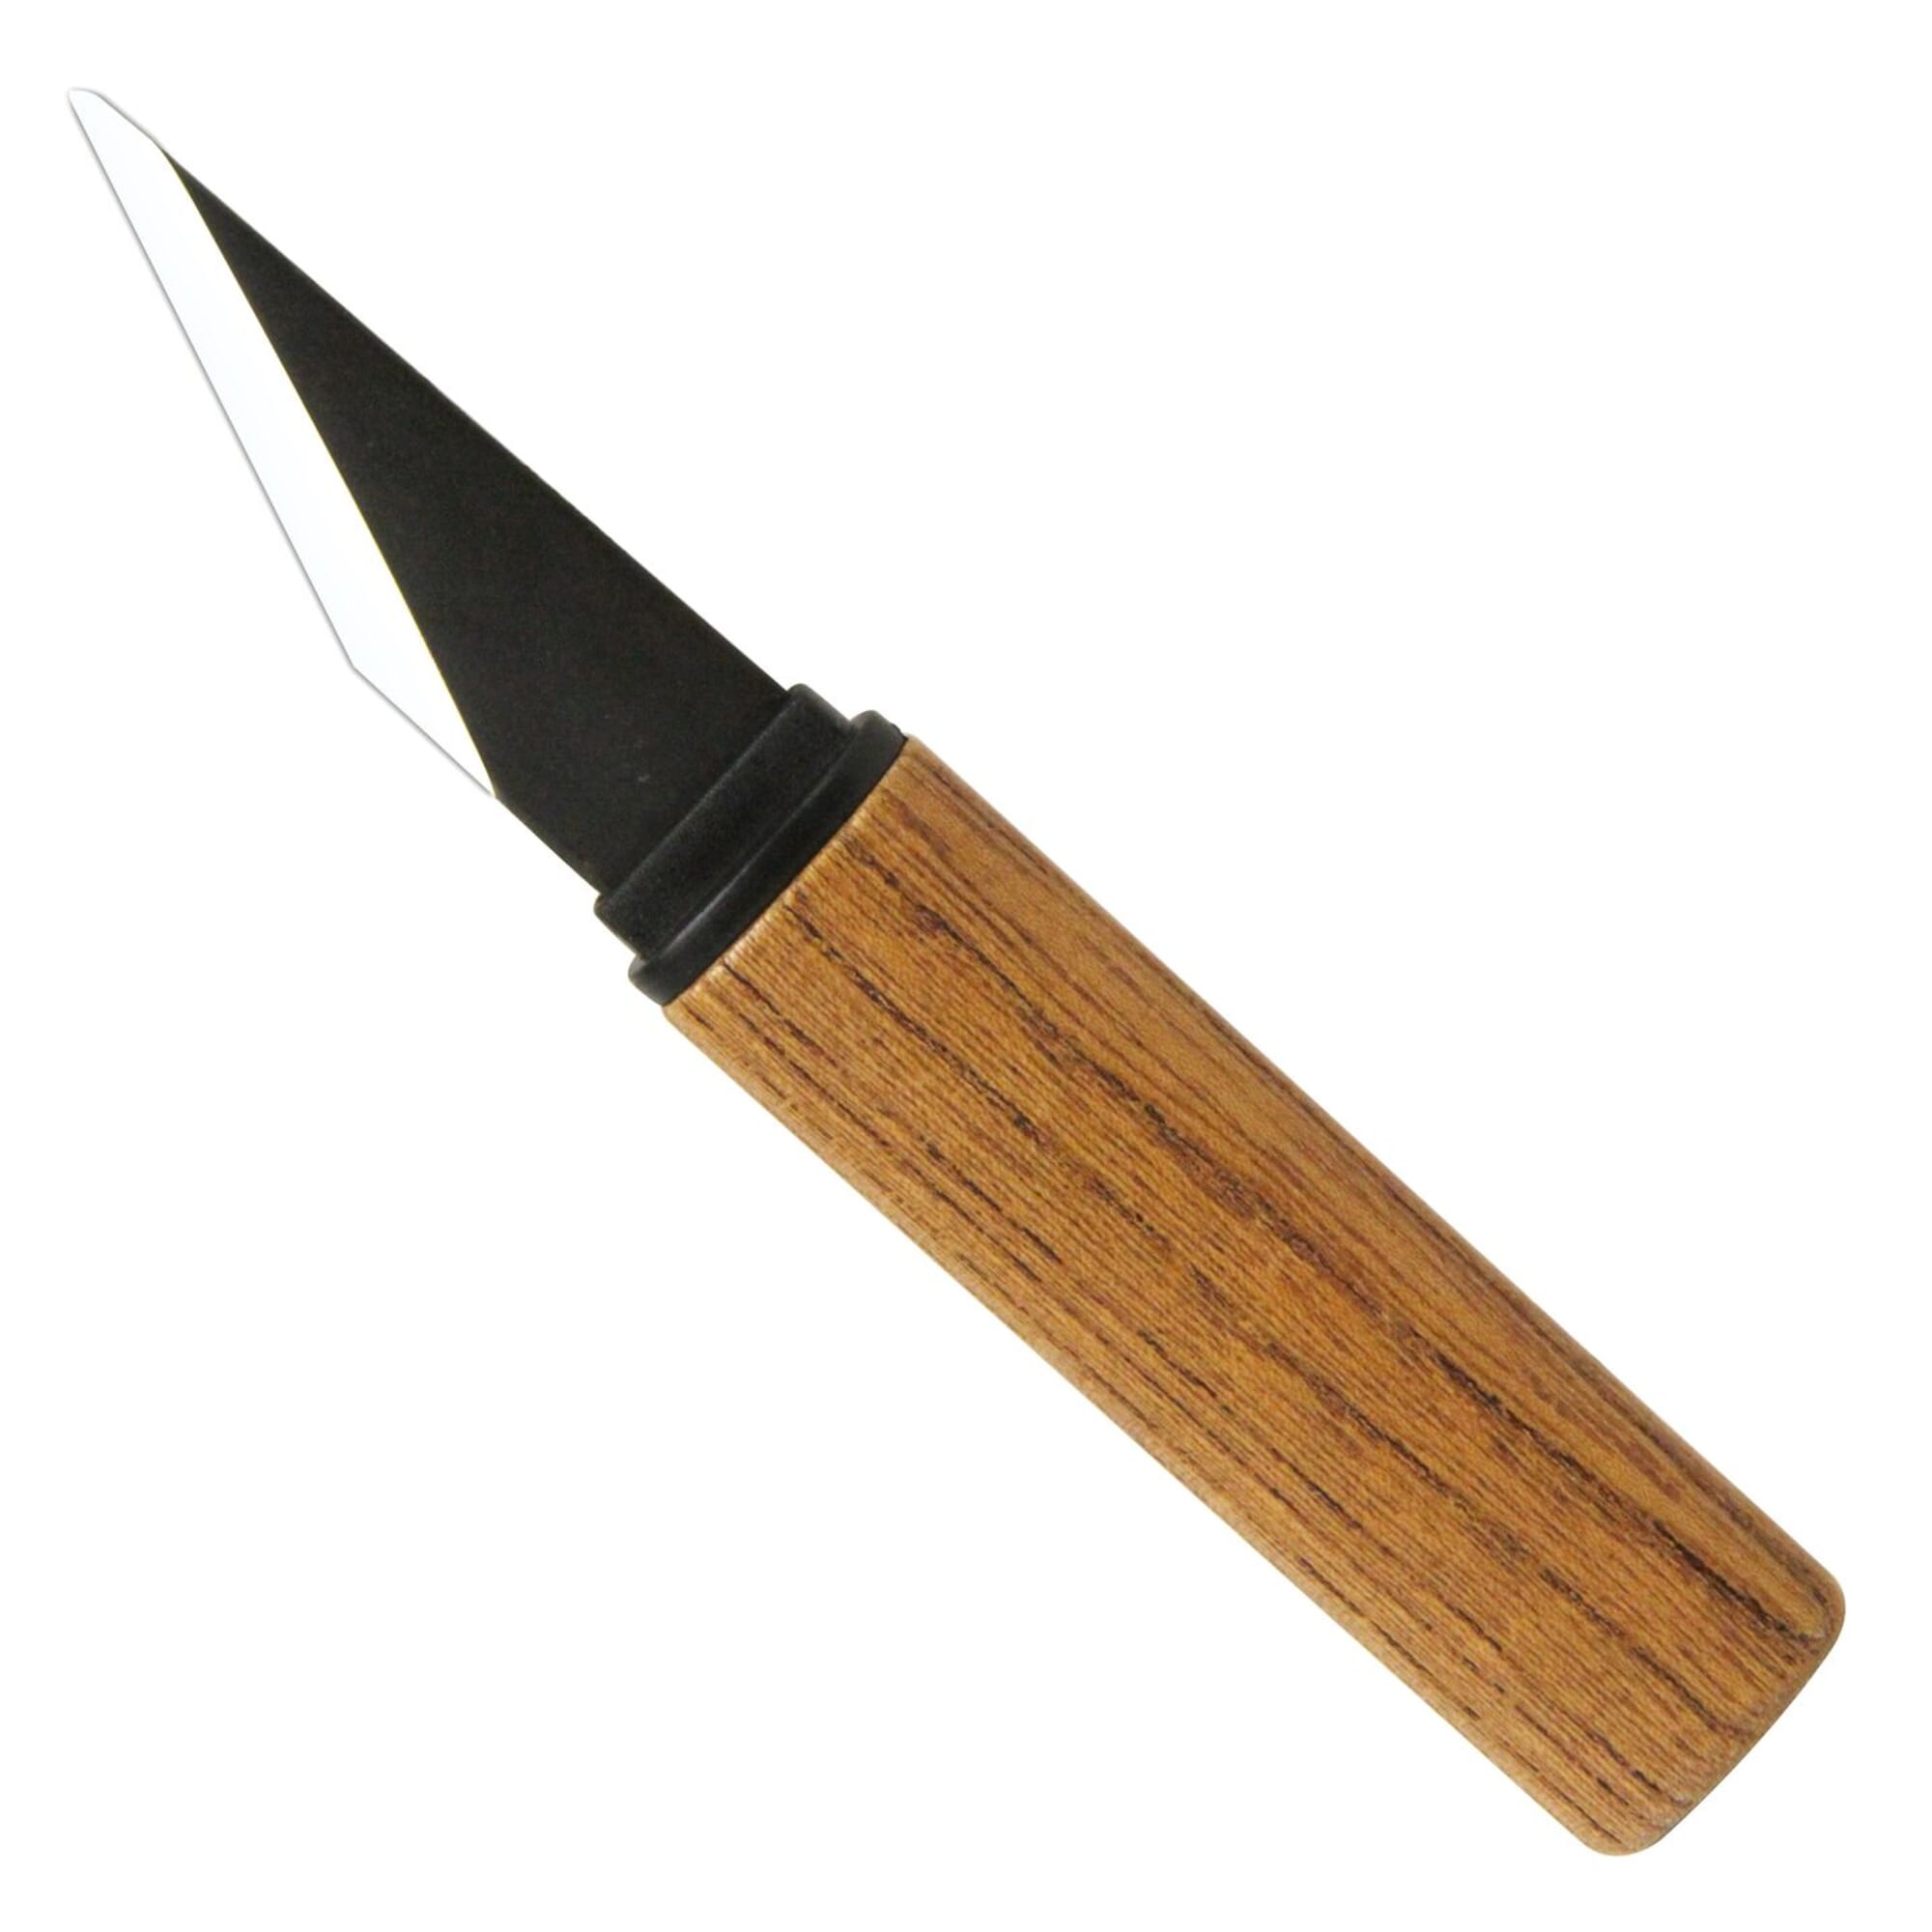 Japanese Kogatana wood carving knife set w/ roll-up bag, set of 6 -  Philadelphia Luthier Tools & Supplies, LLC